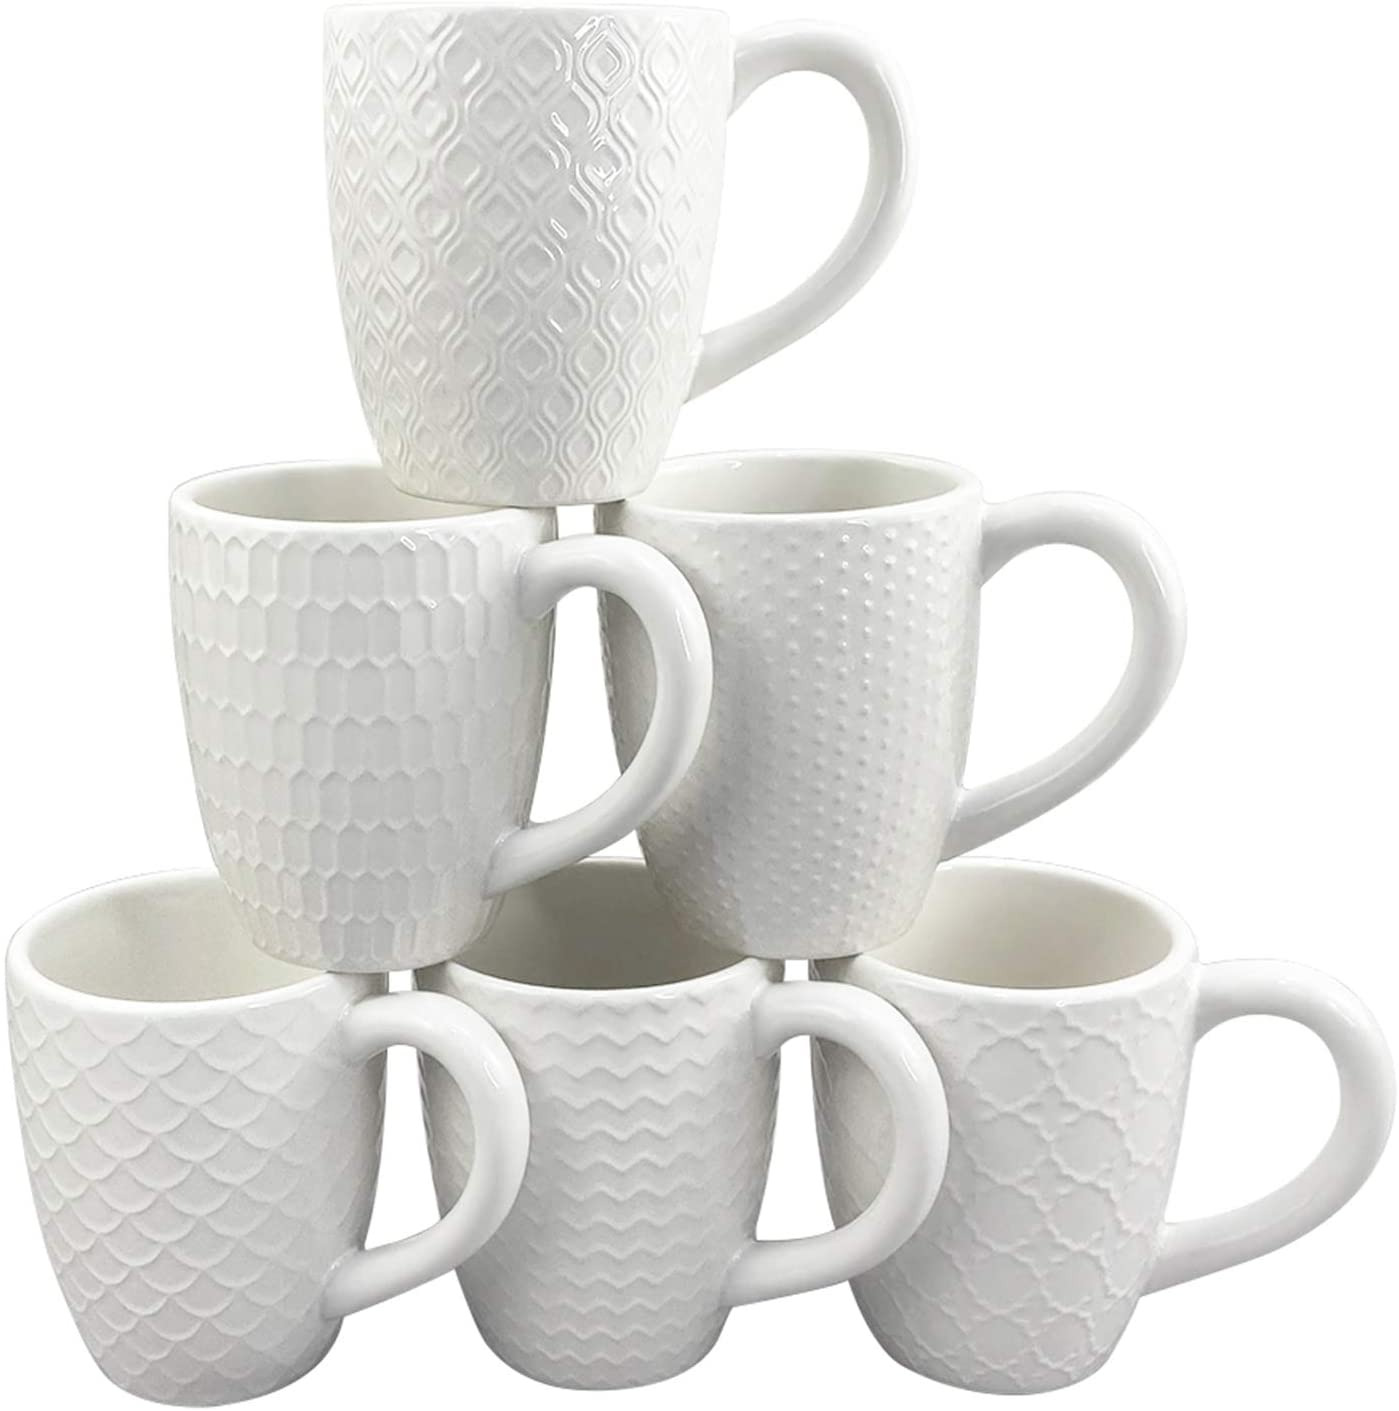 White Ceramic Coffee Mugs Set of 6, Stylish Embossed Coffee Cups